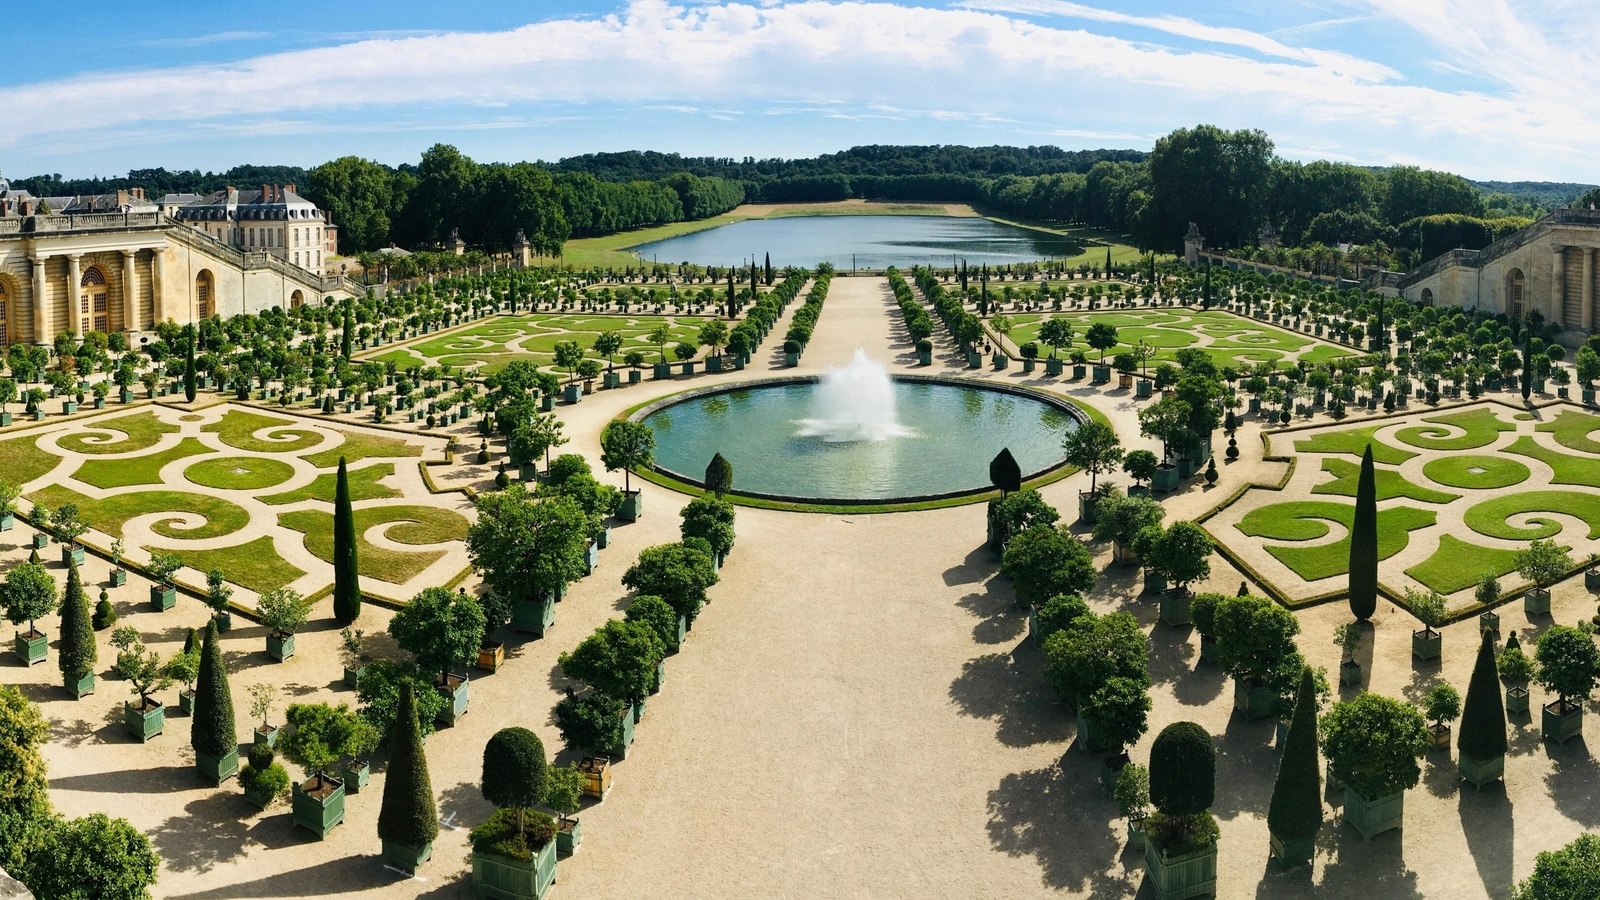 Exploring The Gardens Of Versailles